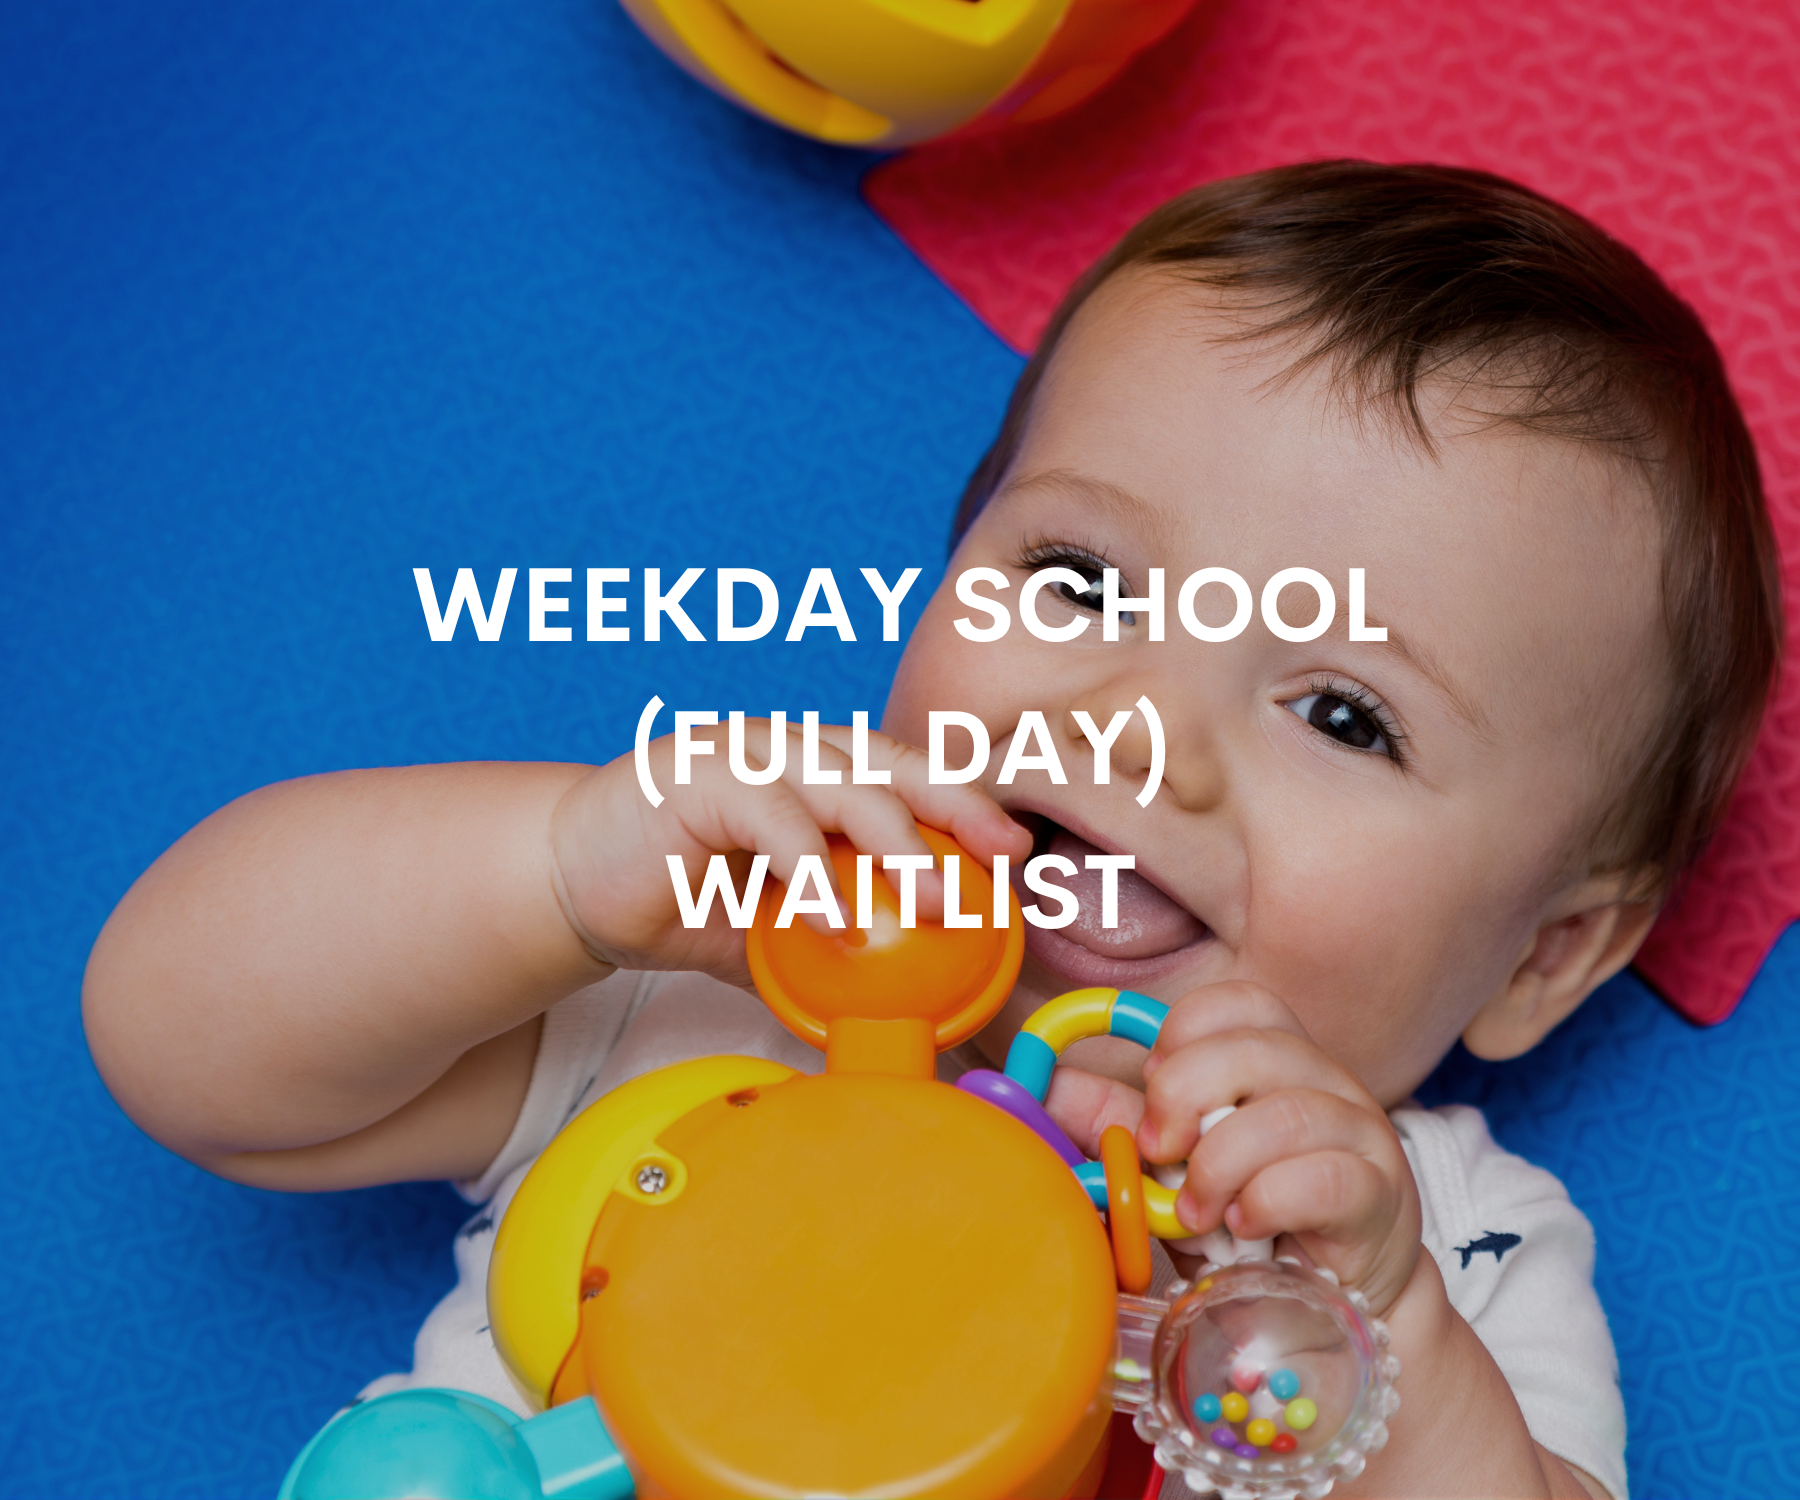 WEEKDAY SCHOOL (FULL DAY) WAITLIST.png